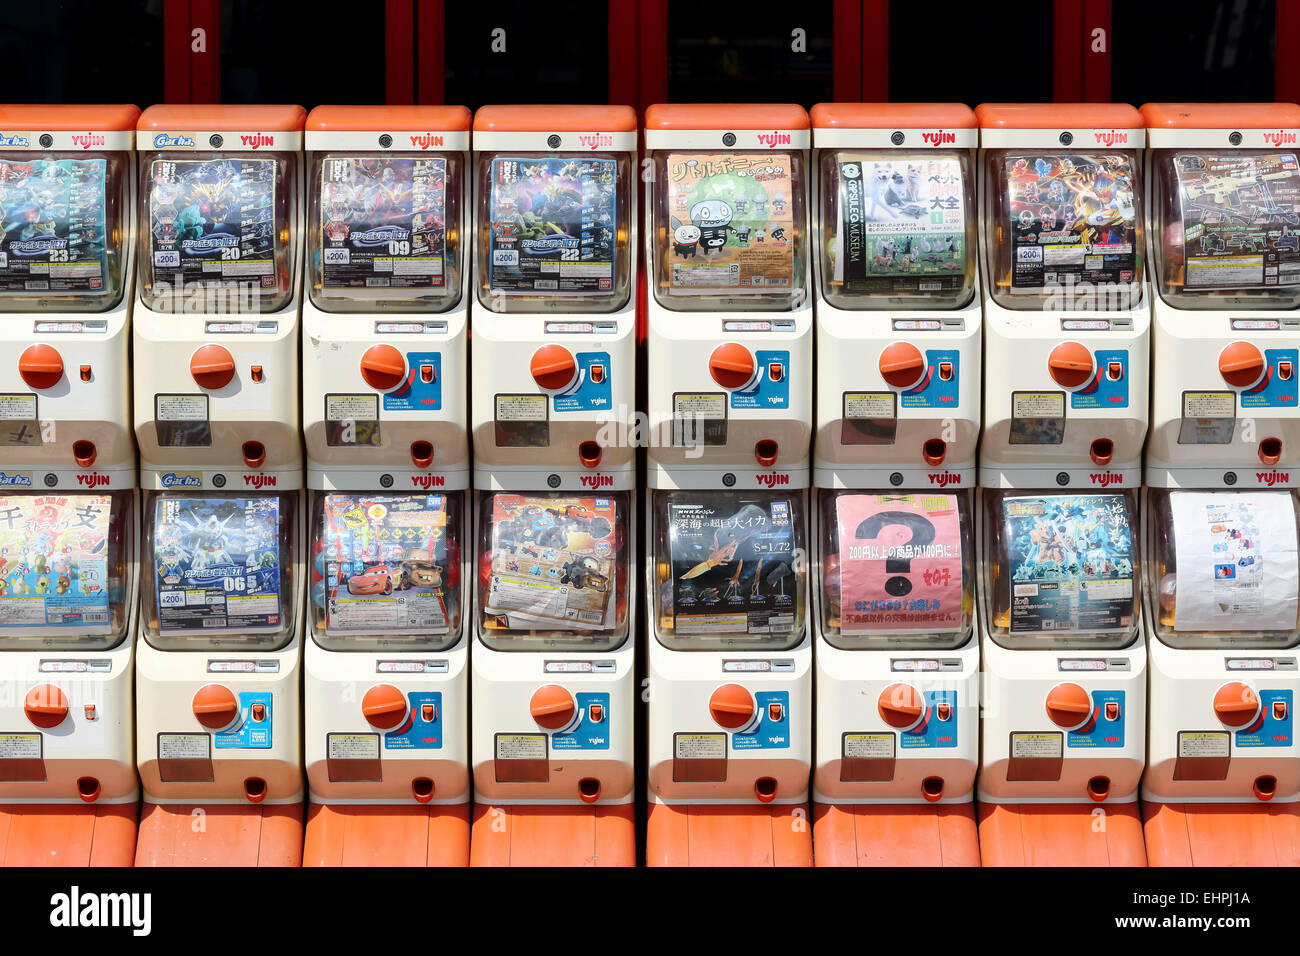 bigheadtacocom Vending Machines in Girls Anime District